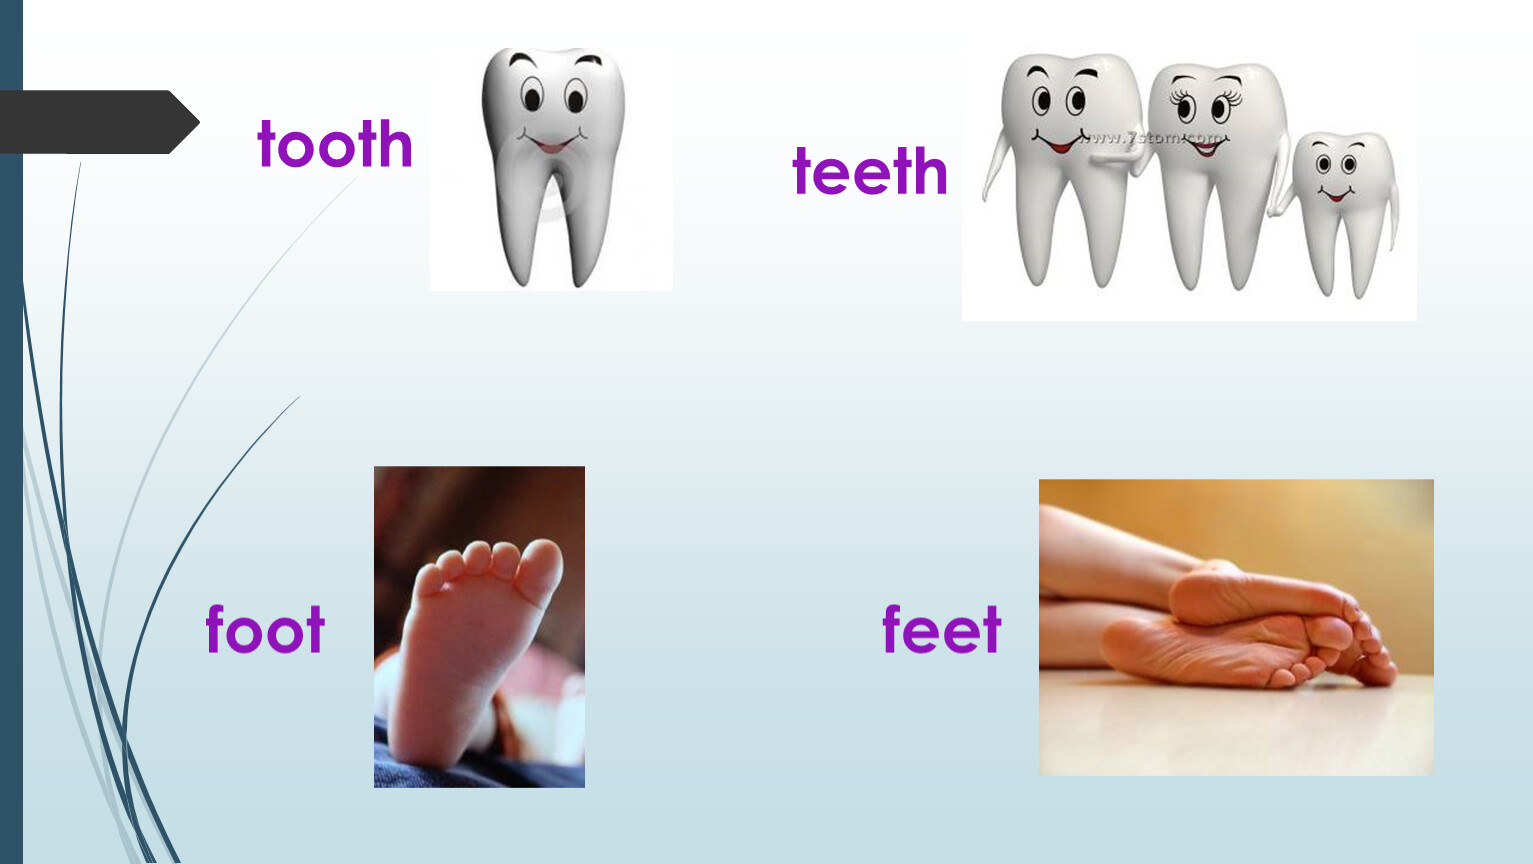 Foot по английски. Tooth Teeth foot feet правило. Tooth во множественном числе на английском. Зубы на английском языке. Множественное число в английском языке foot Teeth.